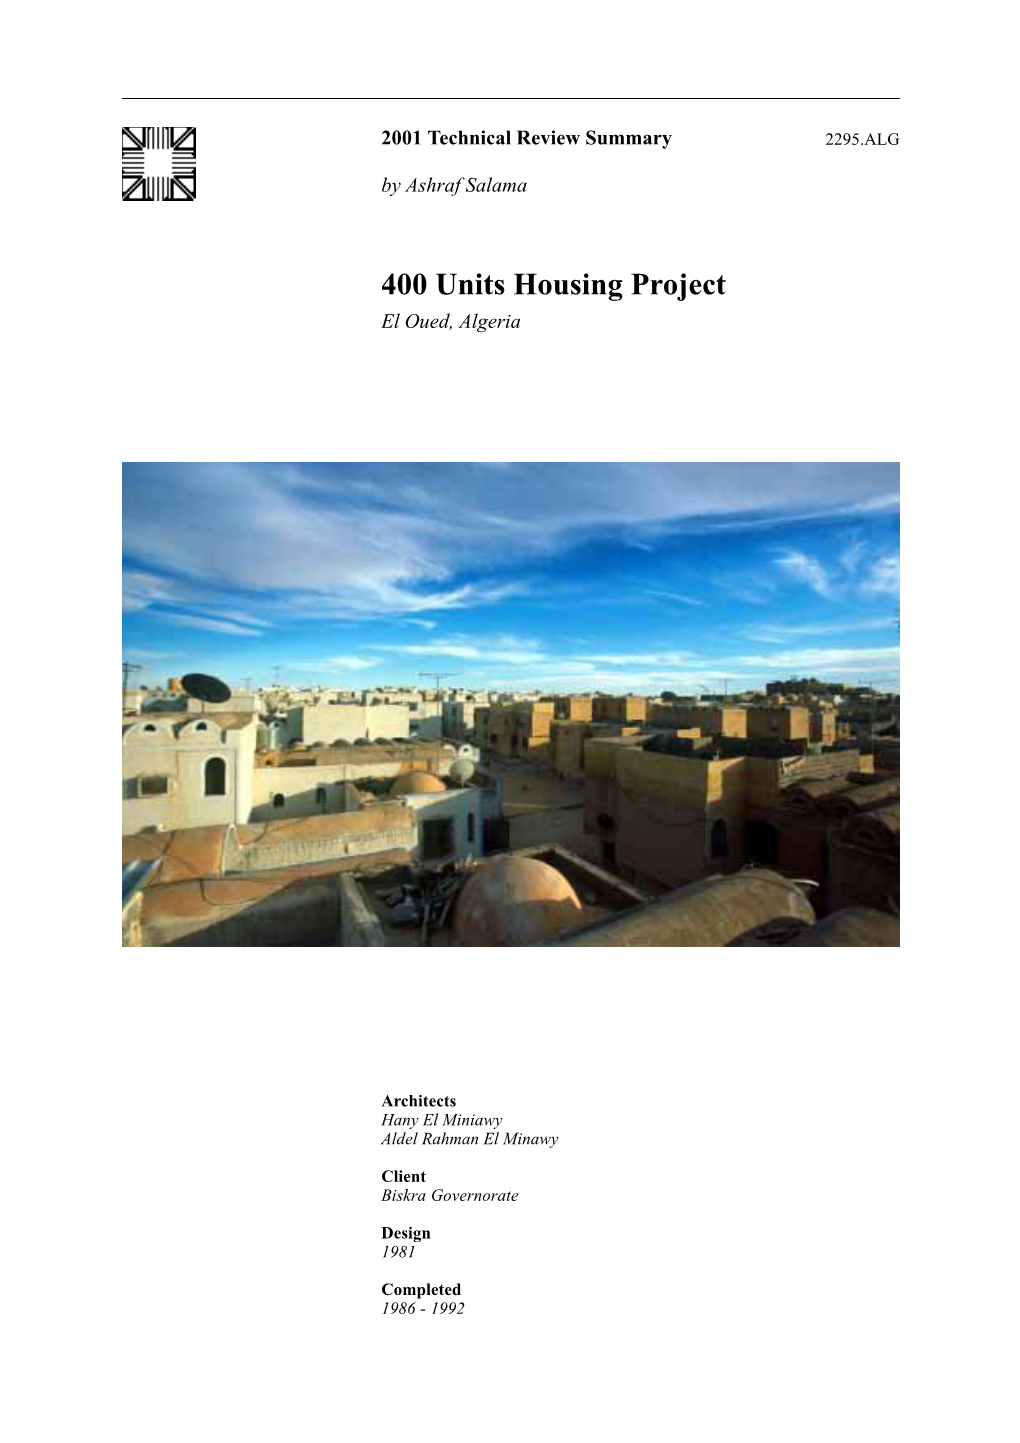 400 Units Housing Project El Oued, Algeria